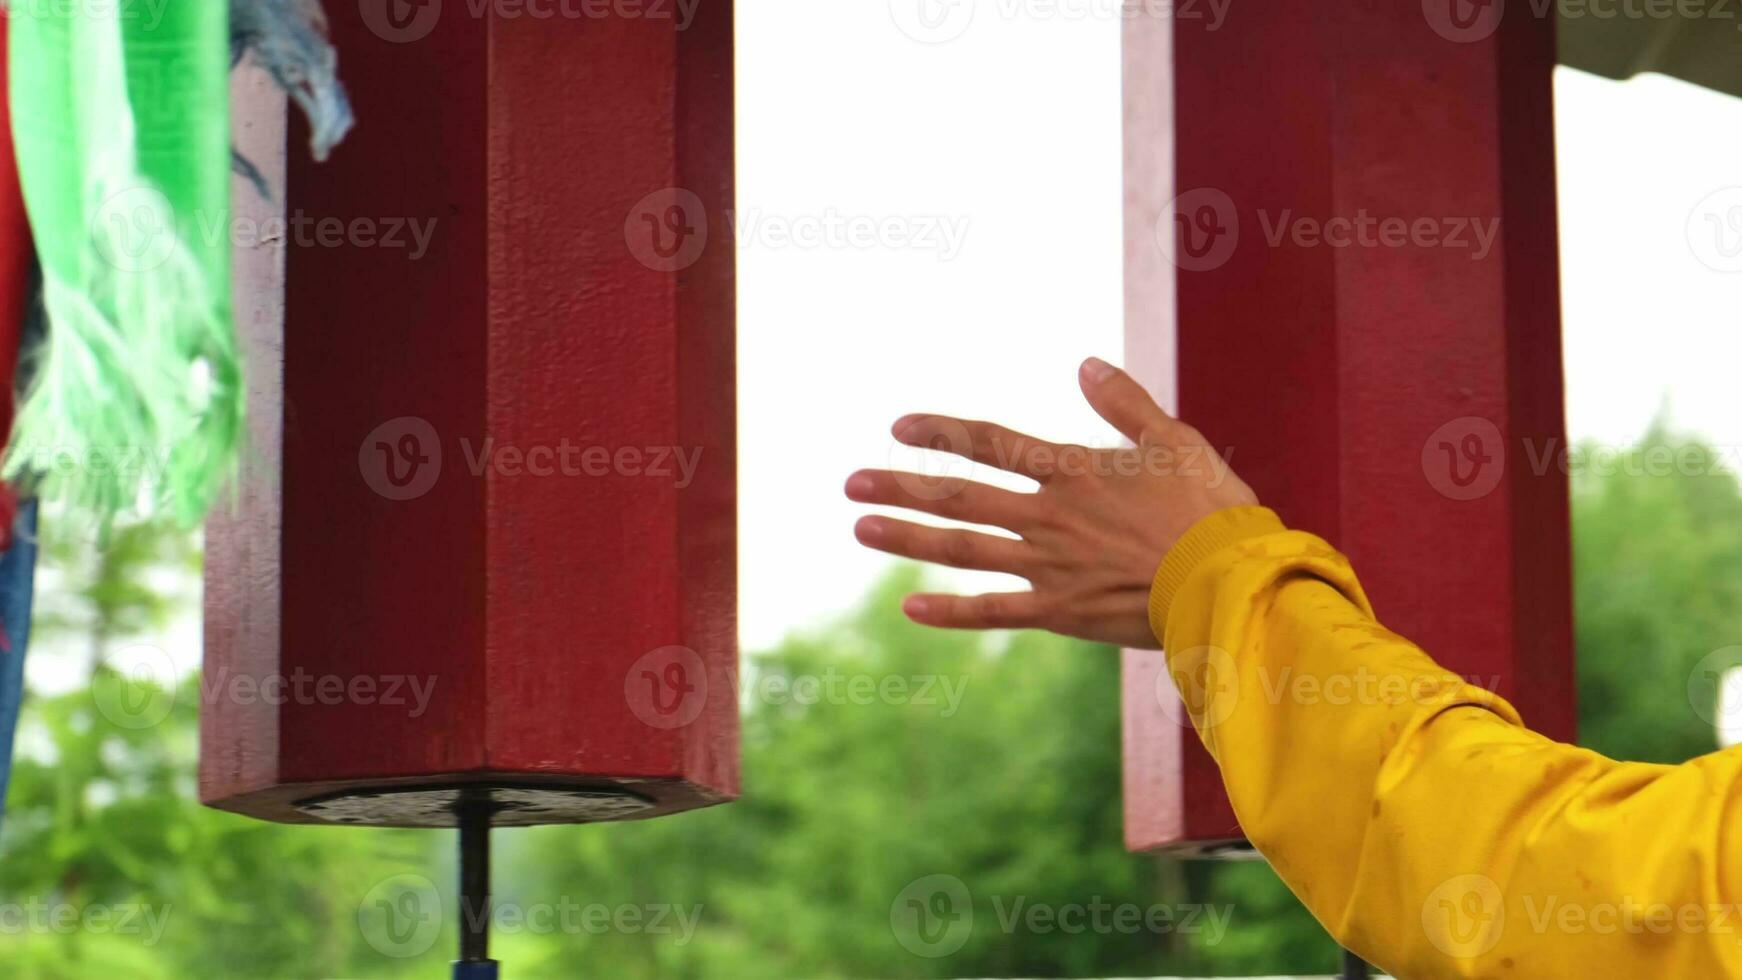 persoon pelgrim vrouw hand- aanraken draaien spinnen boeddhistisch gebed wiel Bij boeddhistisch klooster. gebed wielen in boeddhistisch stoepa tempel. Boeddhisme religie concept. foto